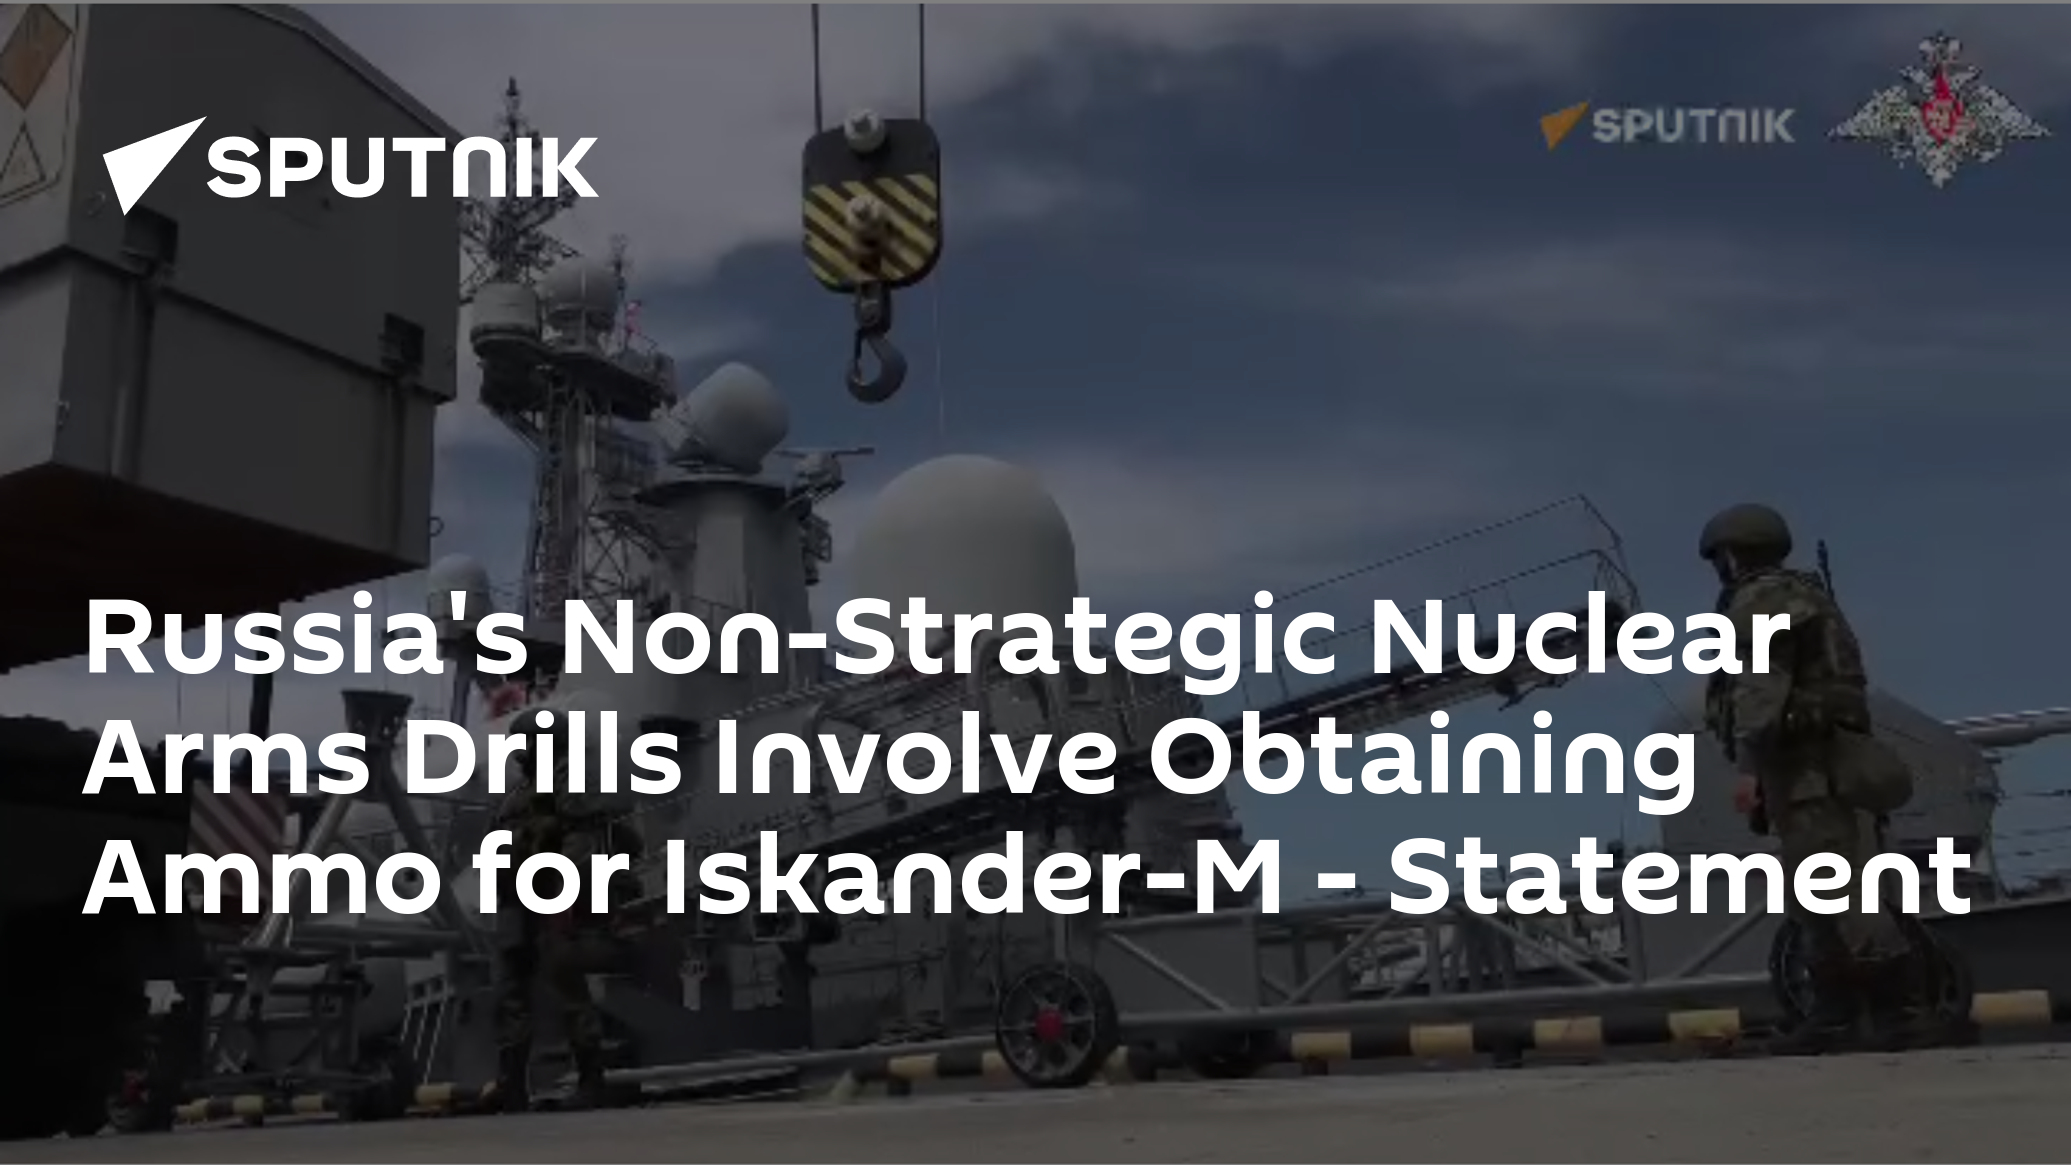 Russia's Non-Strategic Nuclear Arms Drills Involve Obtaining Ammo for Iskander-M - Statement